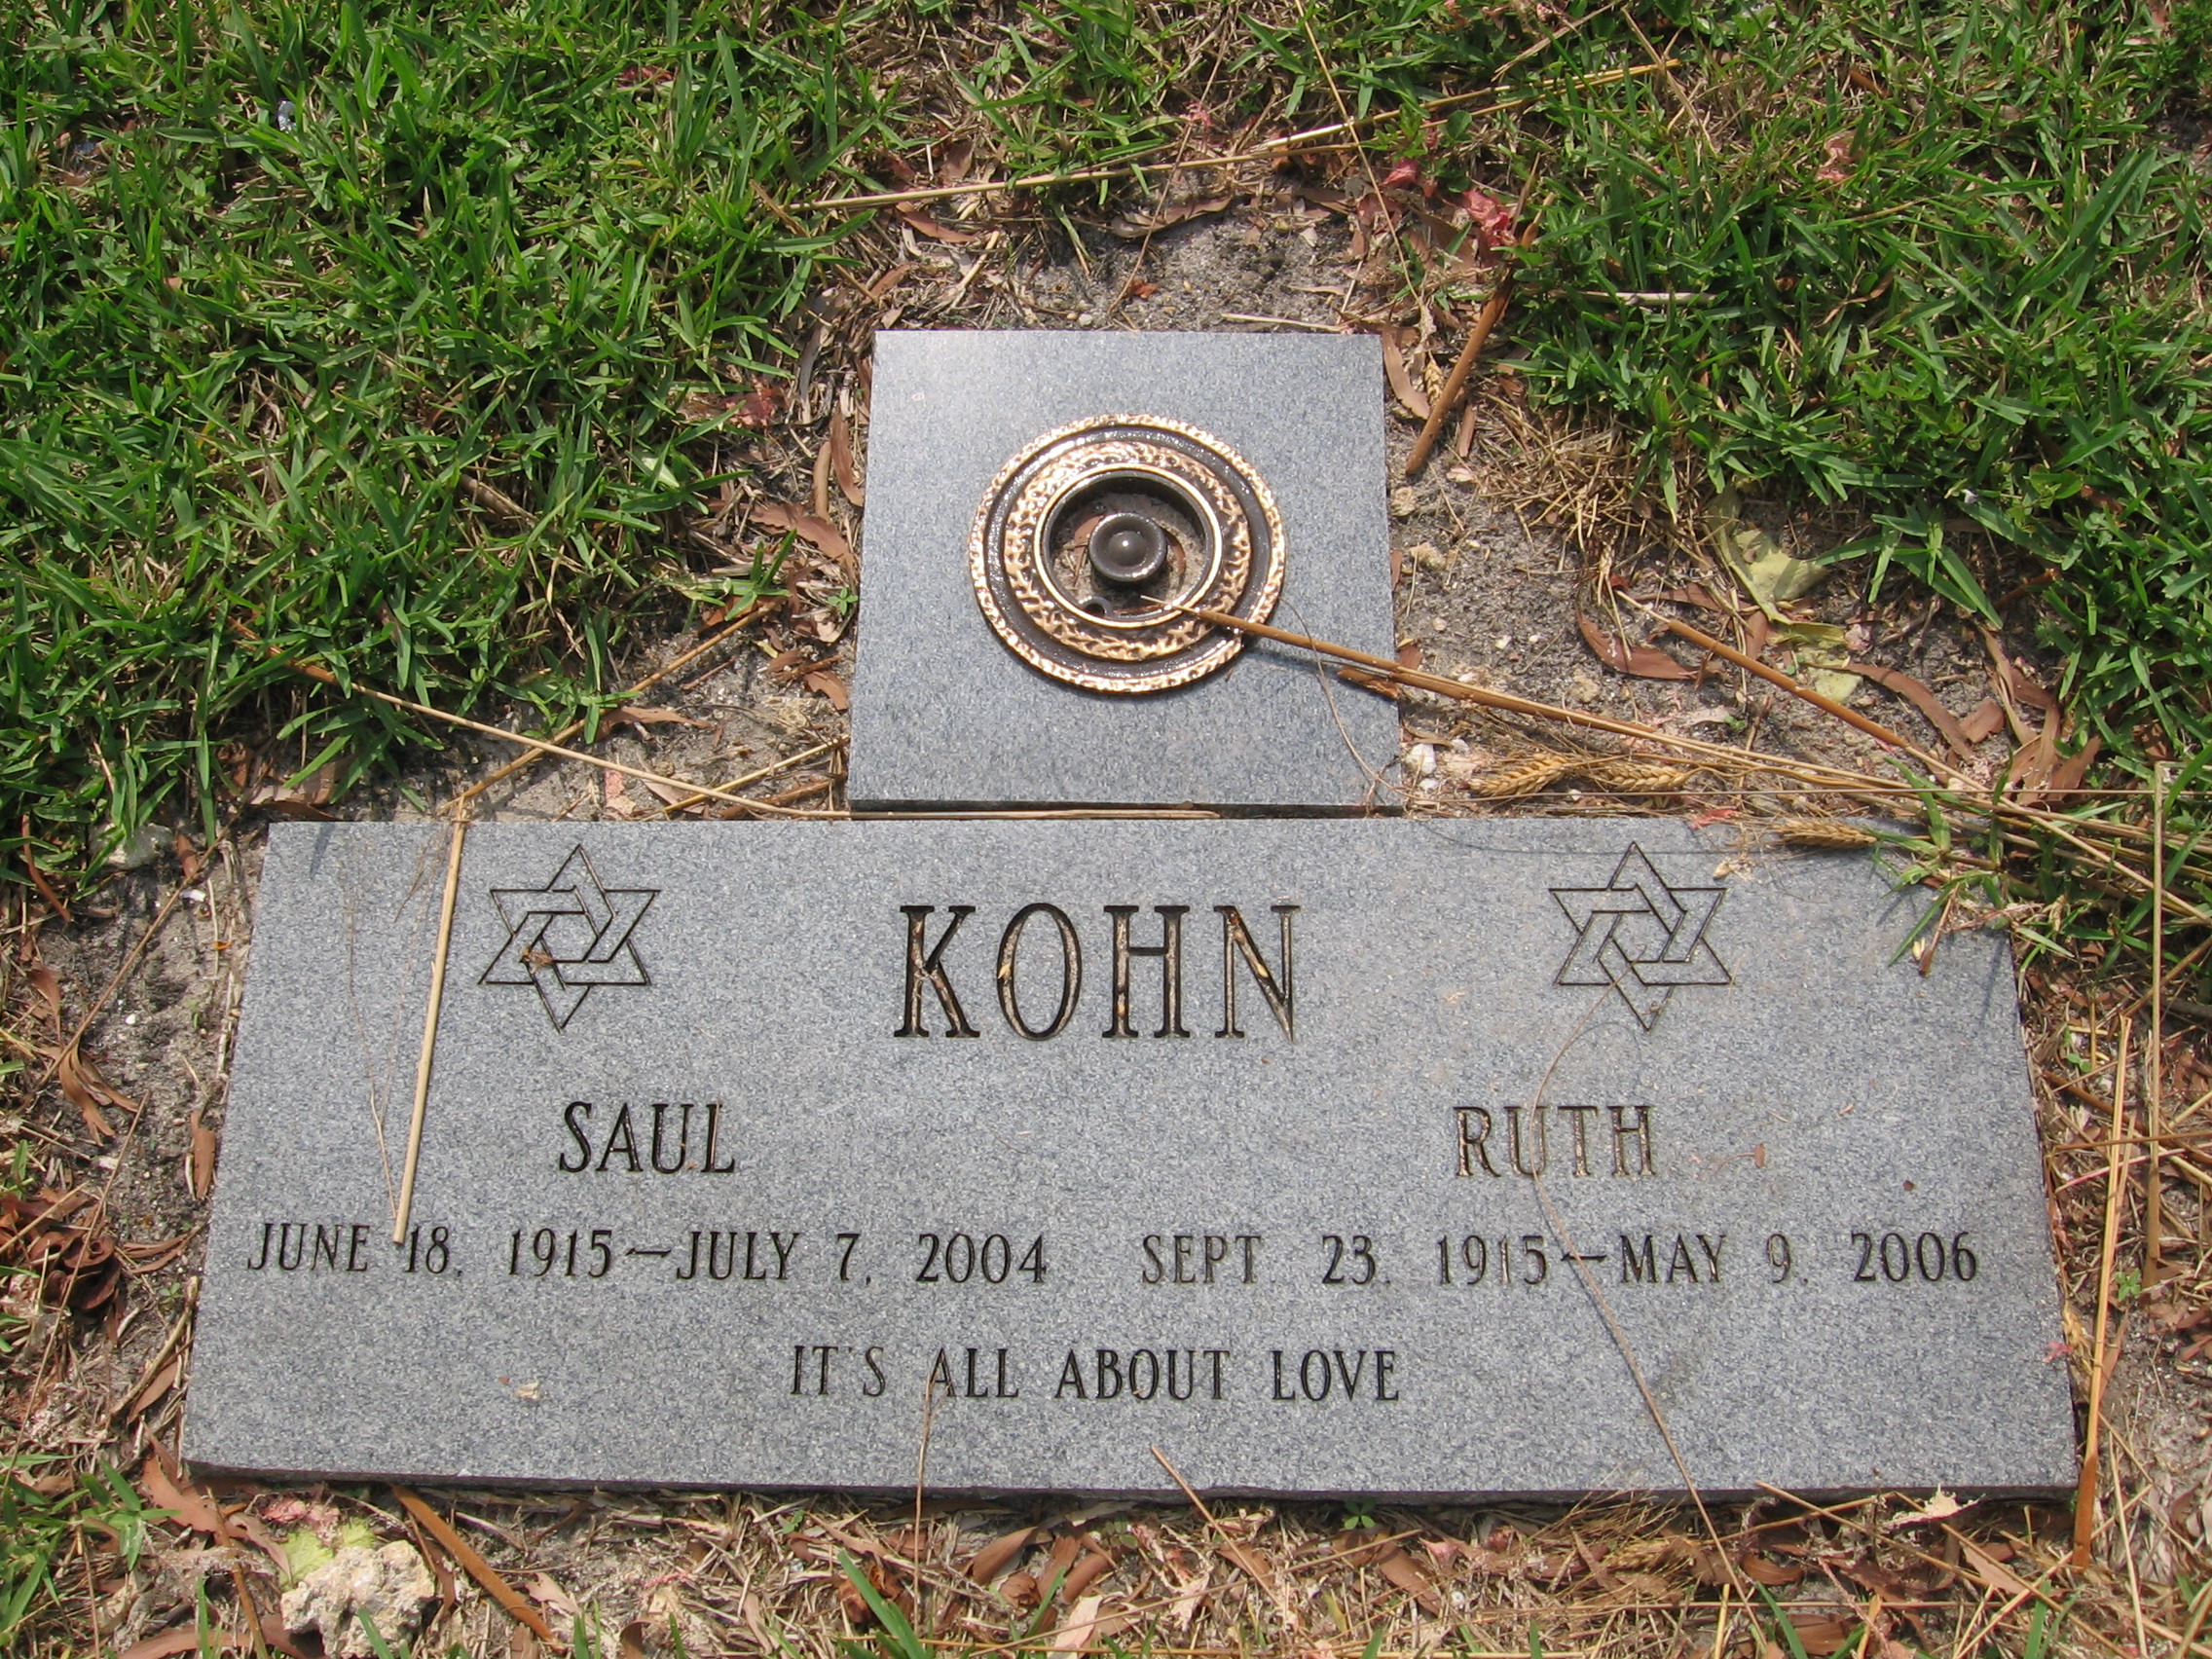 Saul Kohn